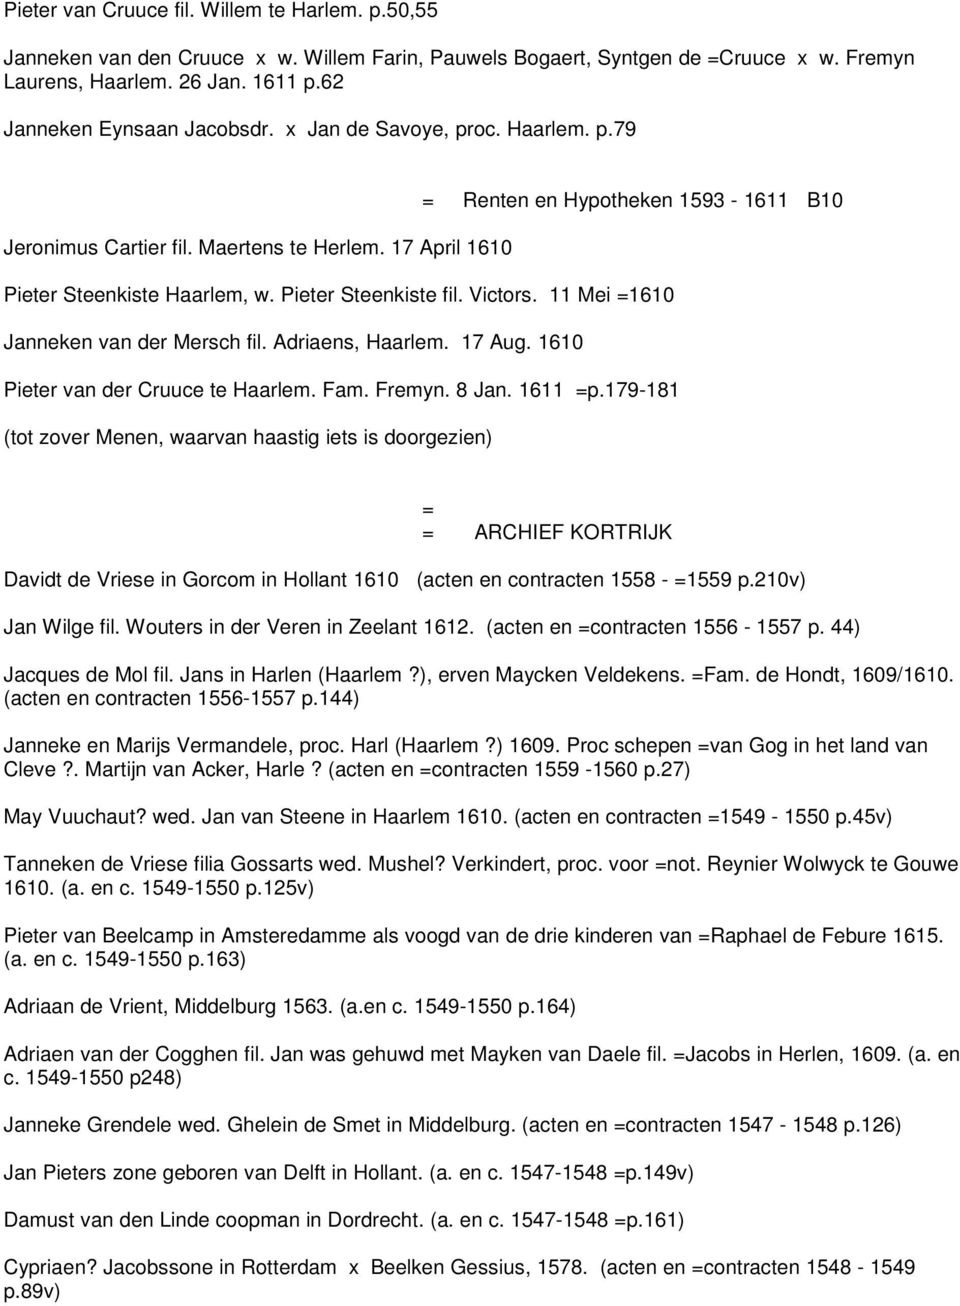 Pieter Steenkiste fil. Victors. 11 Mei =1610 Janneken van der Mersch fil. Adriaens, Haarlem. 17 Aug. 1610 Pieter van der Cruuce te Haarlem. Fam. Fremyn. 8 Jan. 1611 =p.